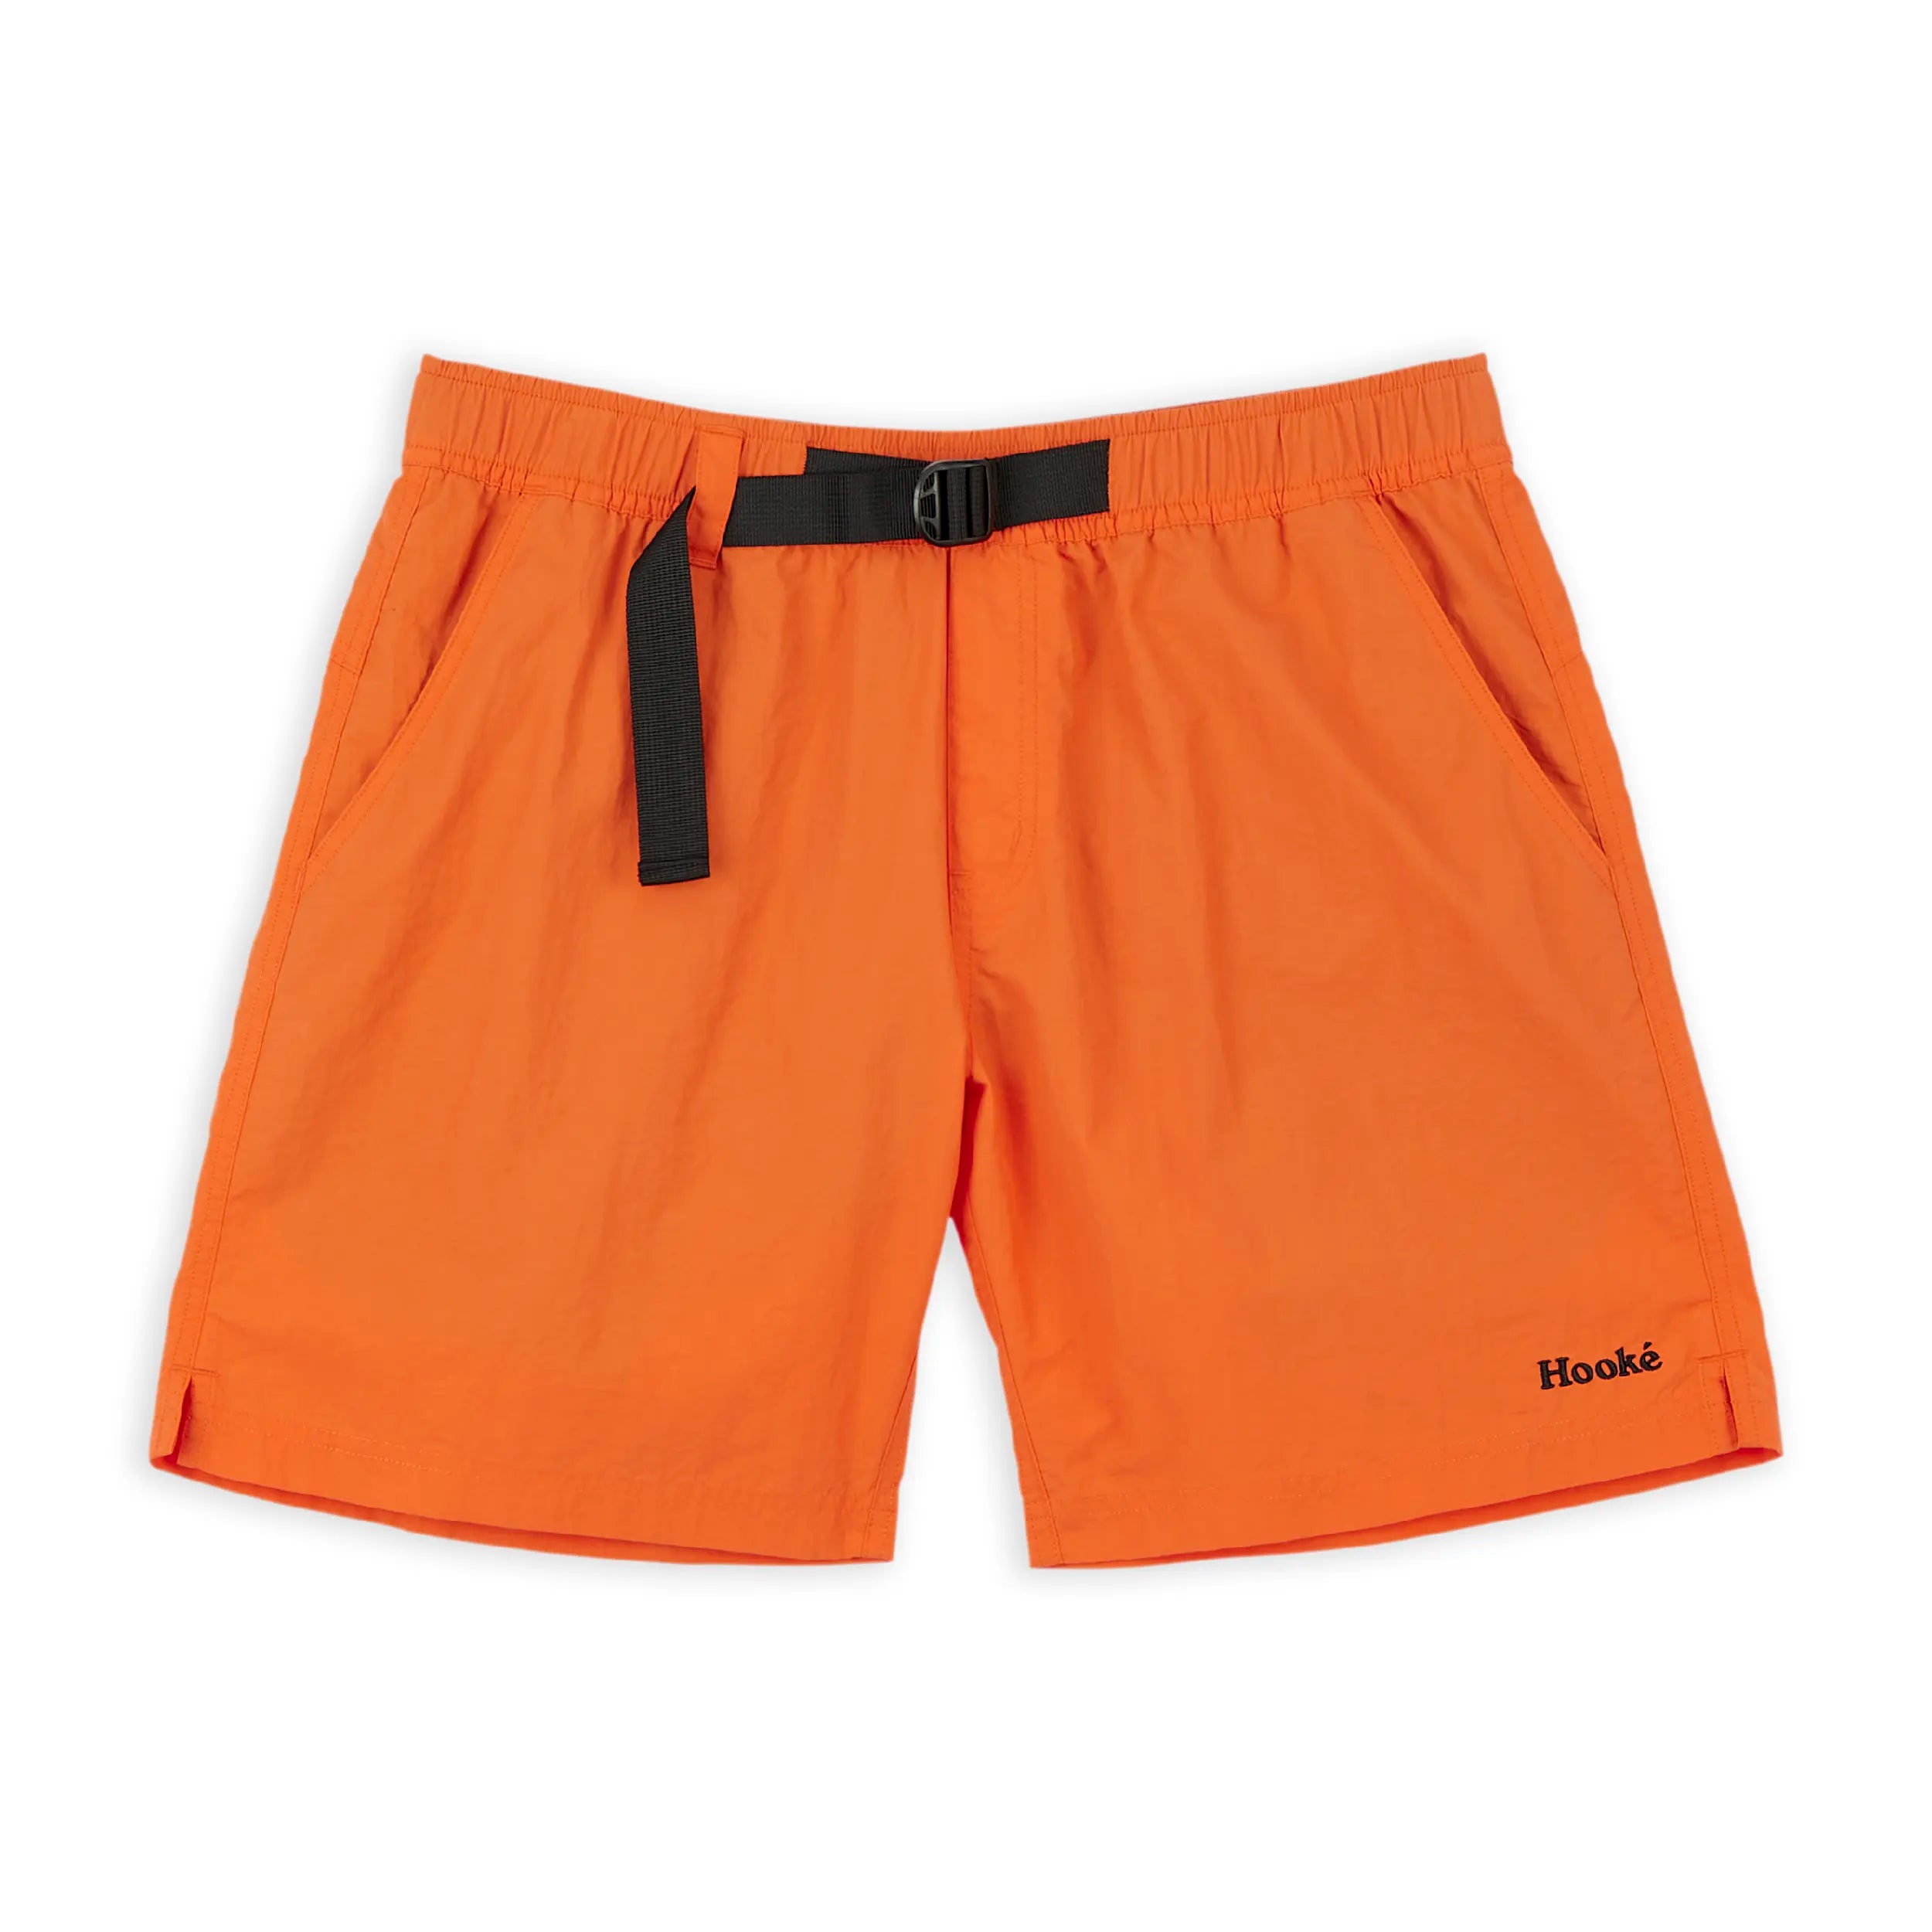 M's River Shorts - M / Orange